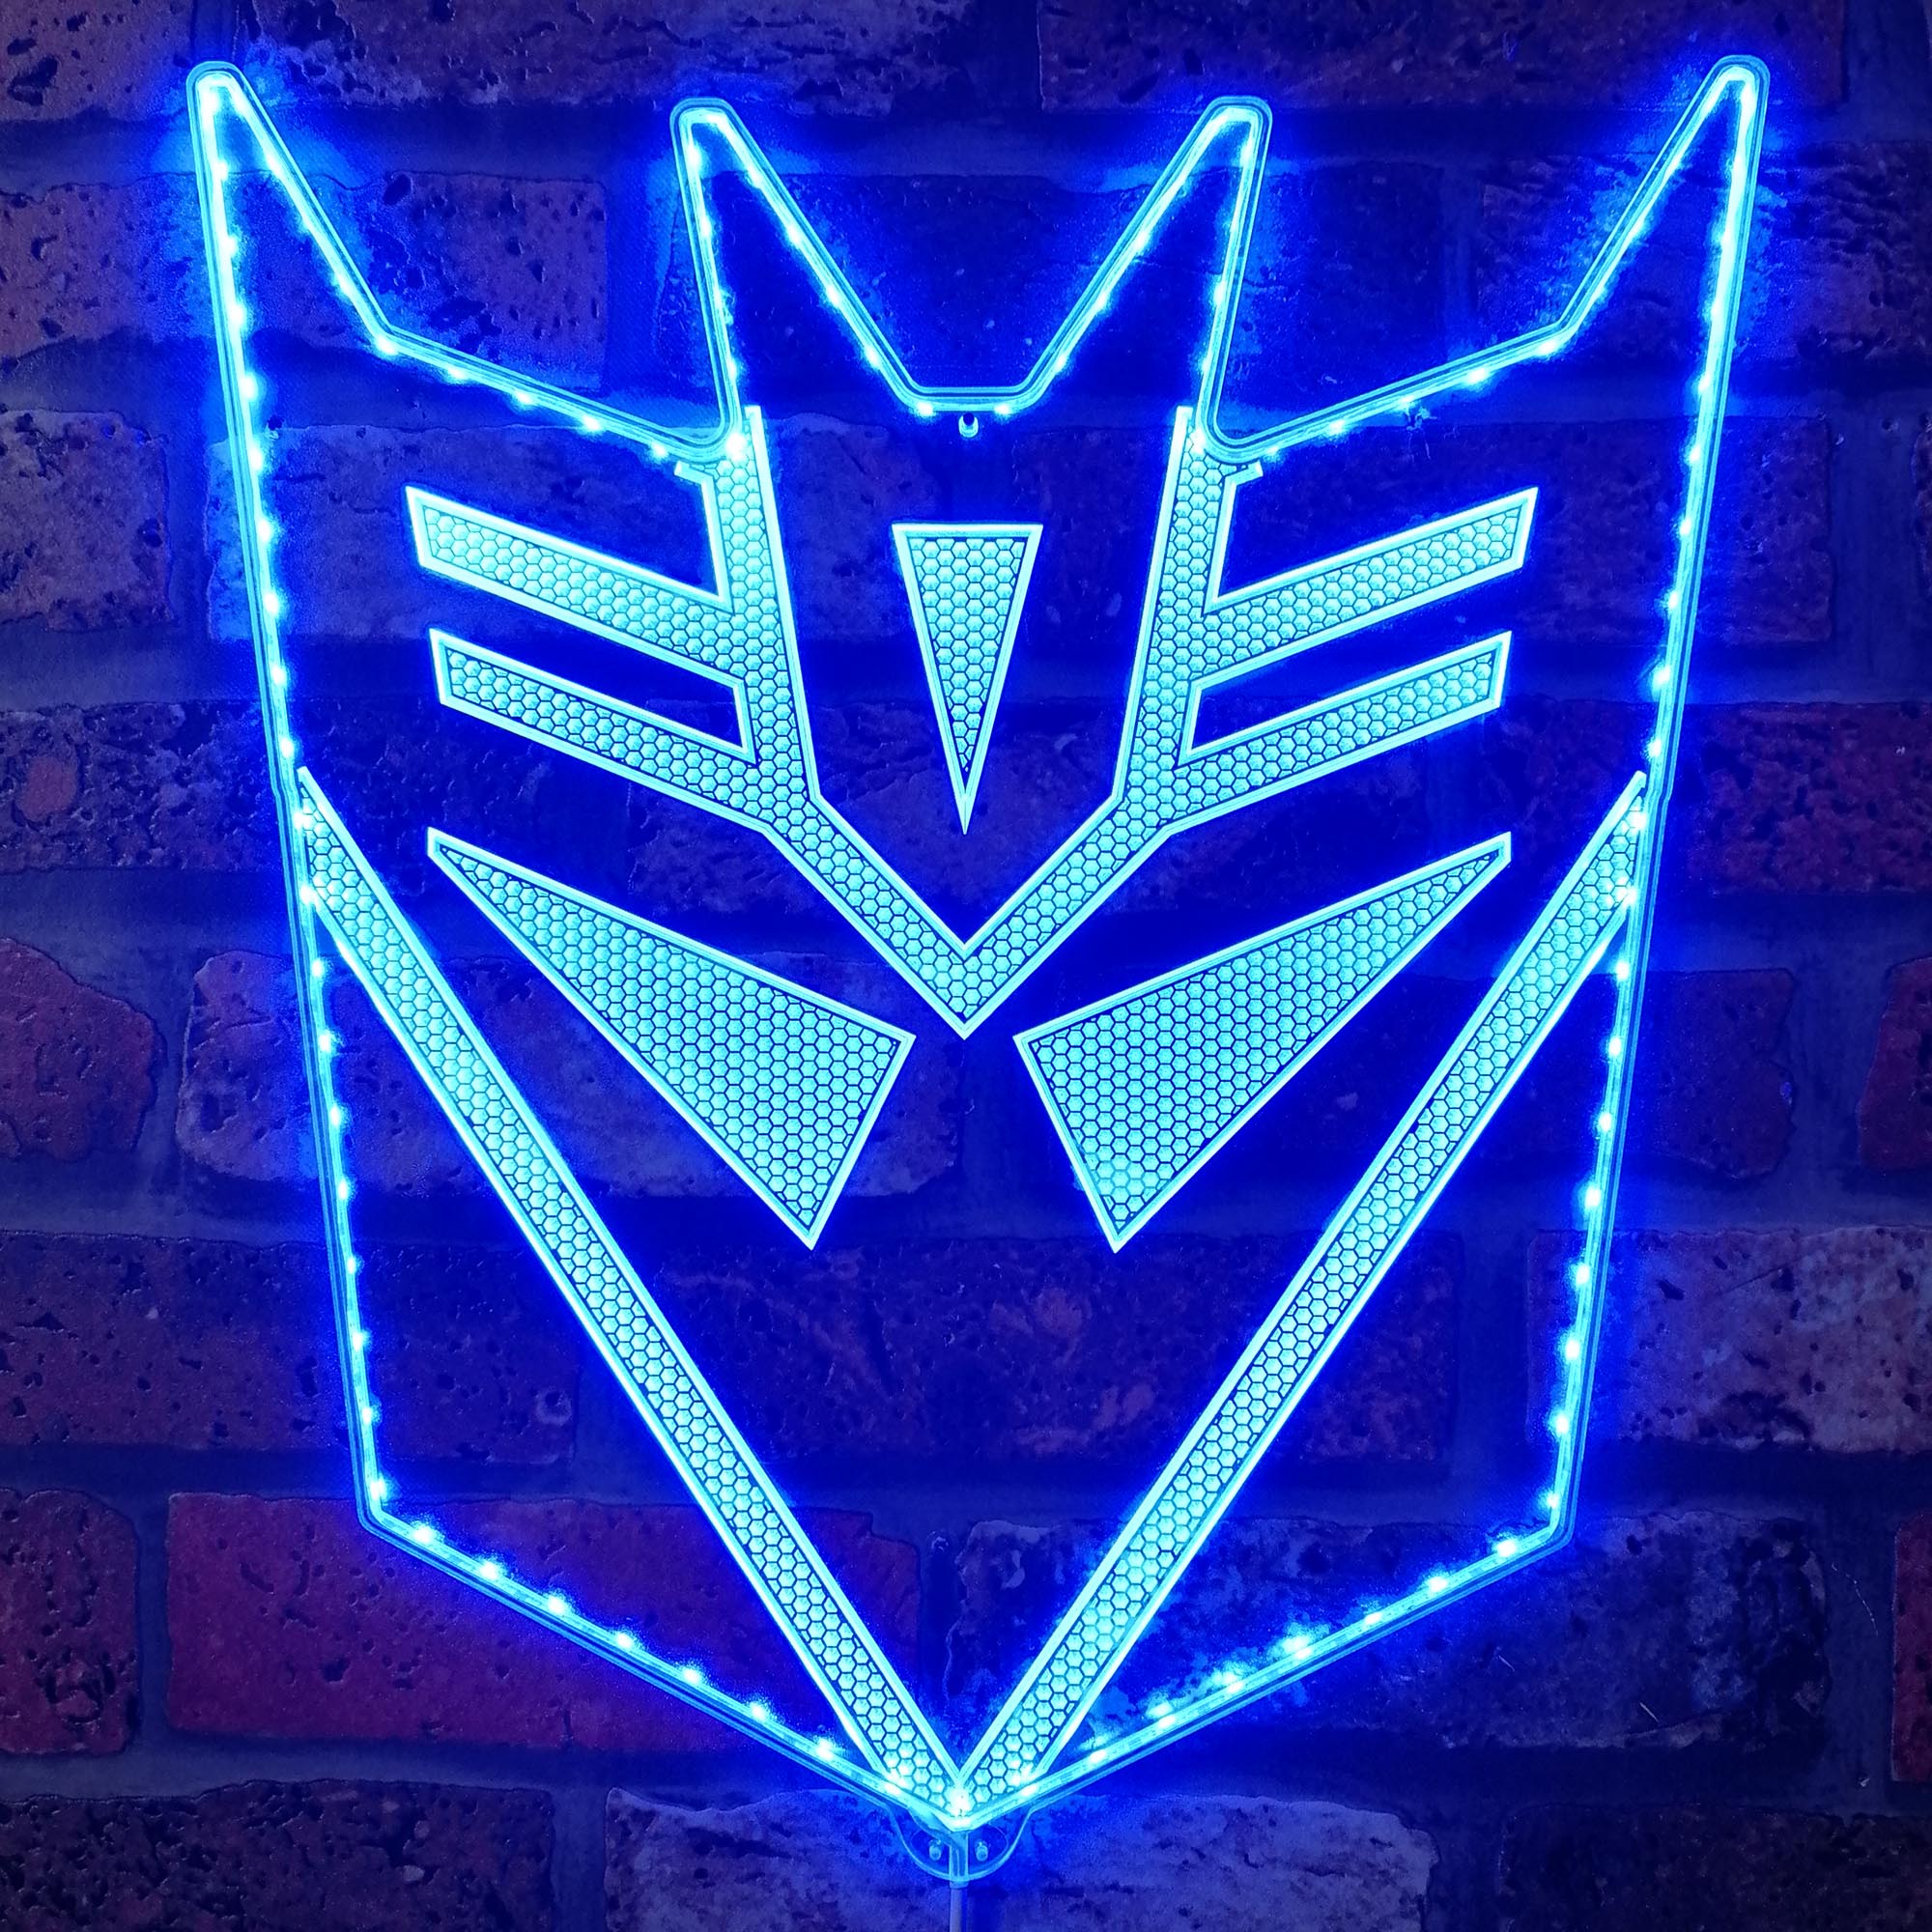 Transformers Dynamic RGB Edge Lit LED Sign